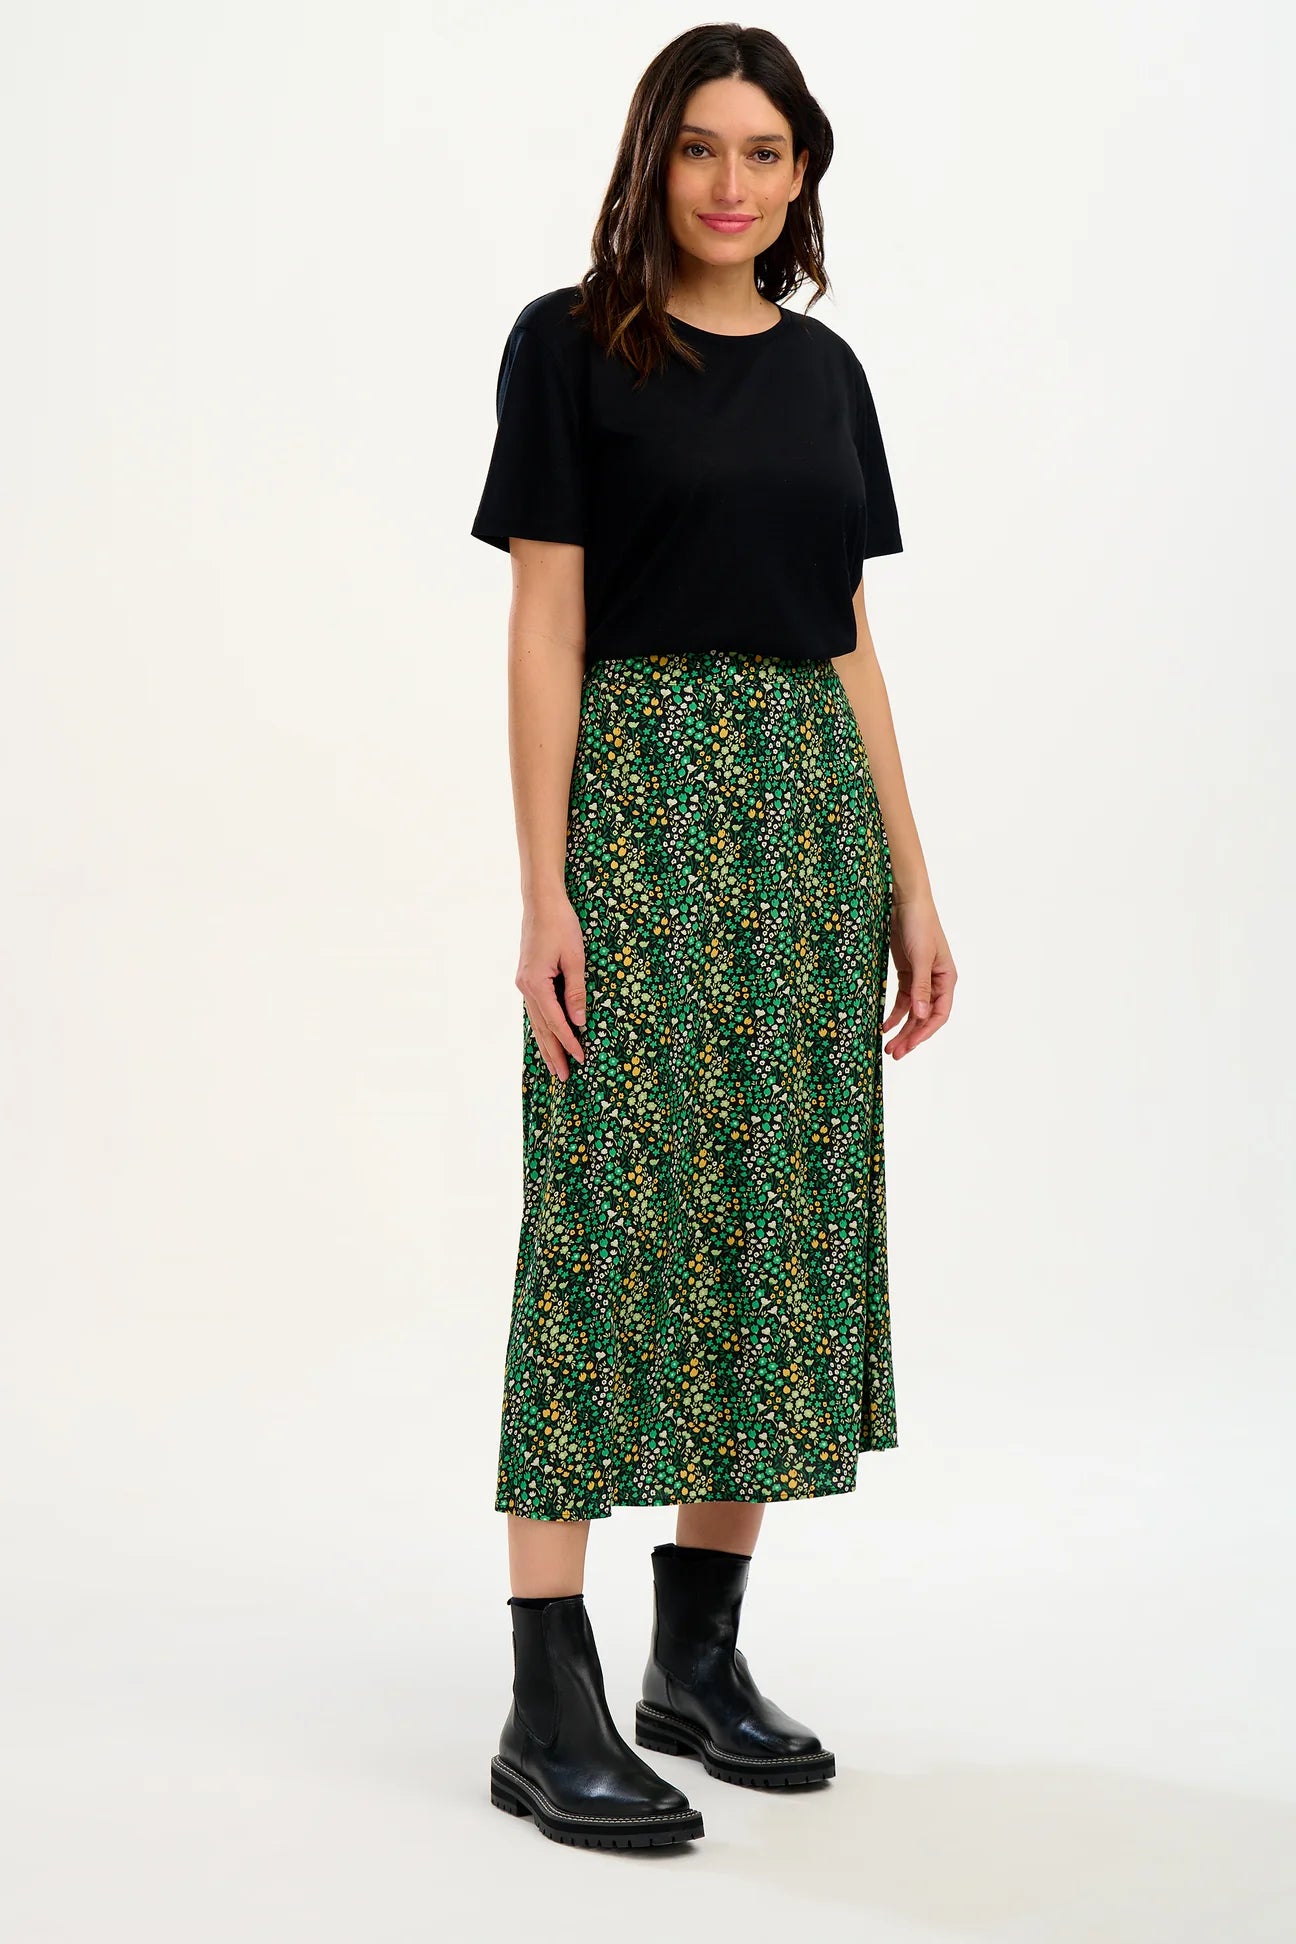 SUGARHILL BRIGHTON-Zora Skirt - Black/Green, Ditsy Floral